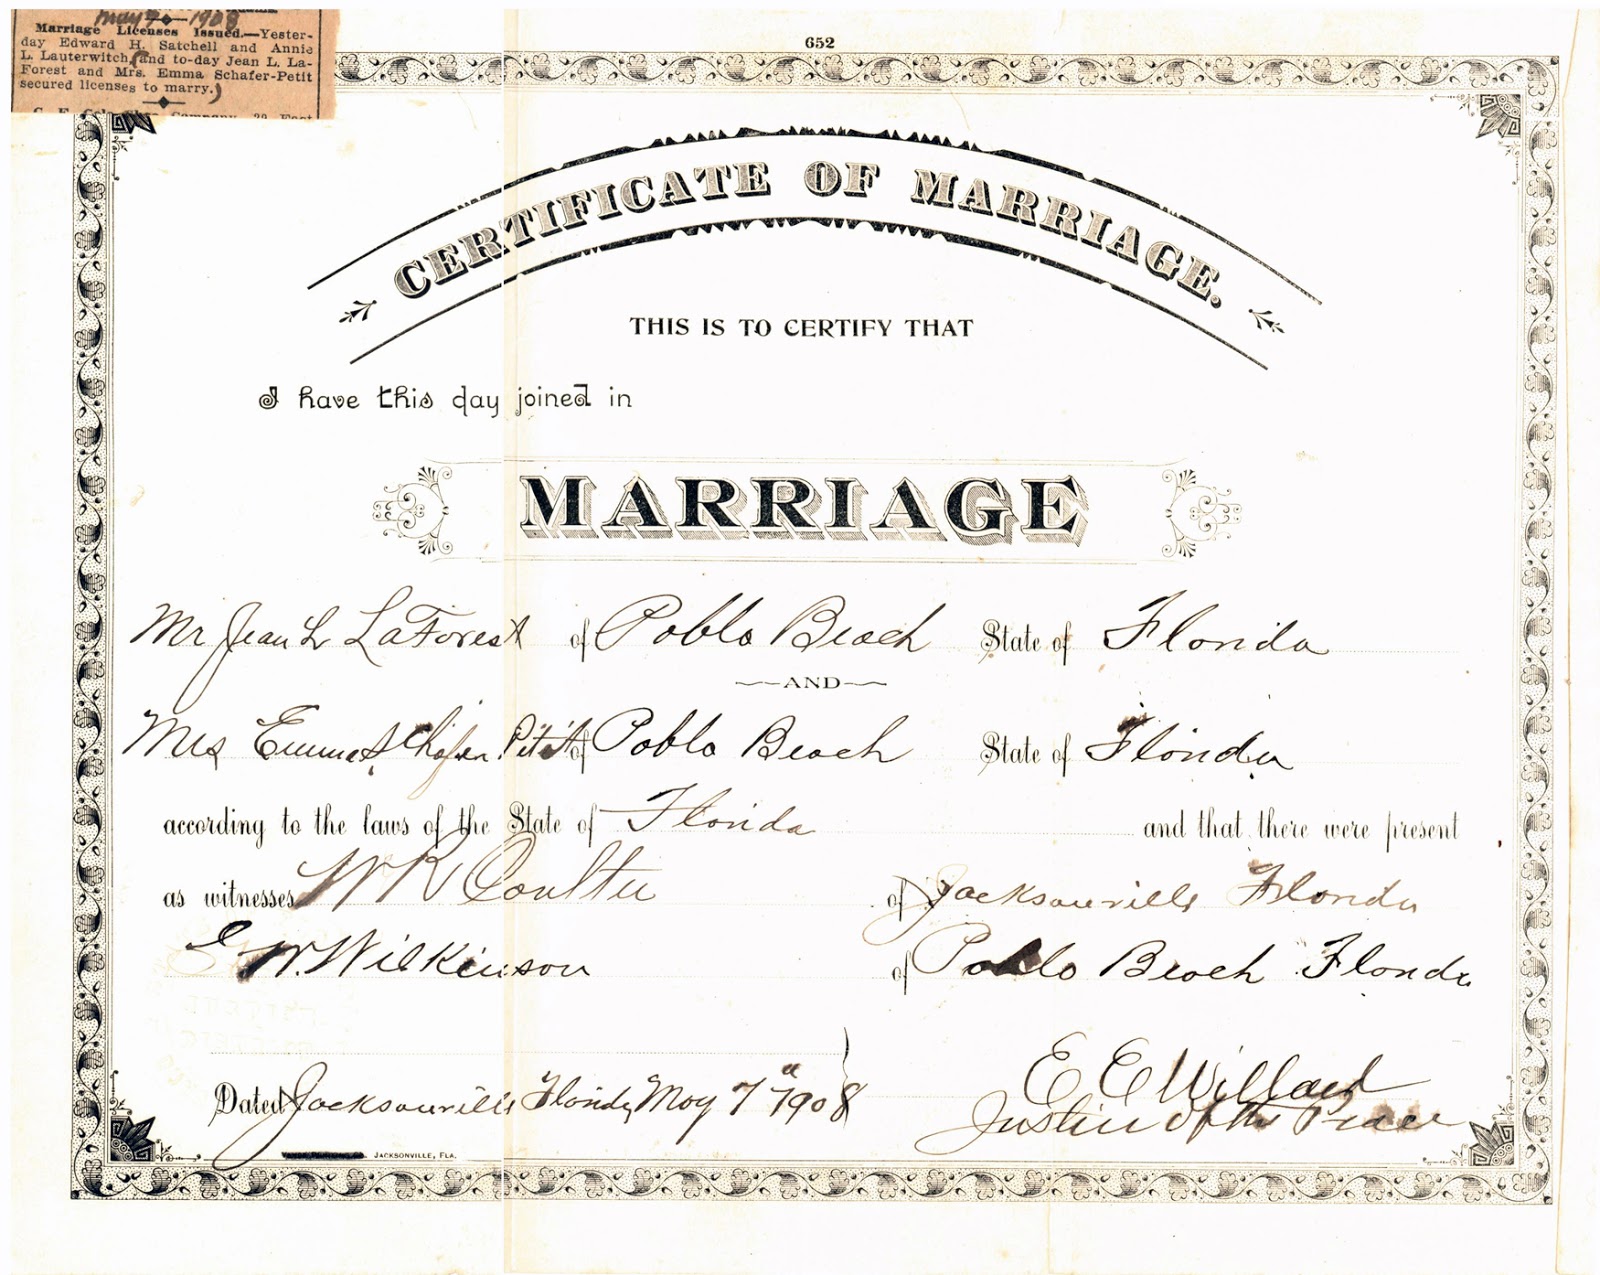 Burlington County Marriage License